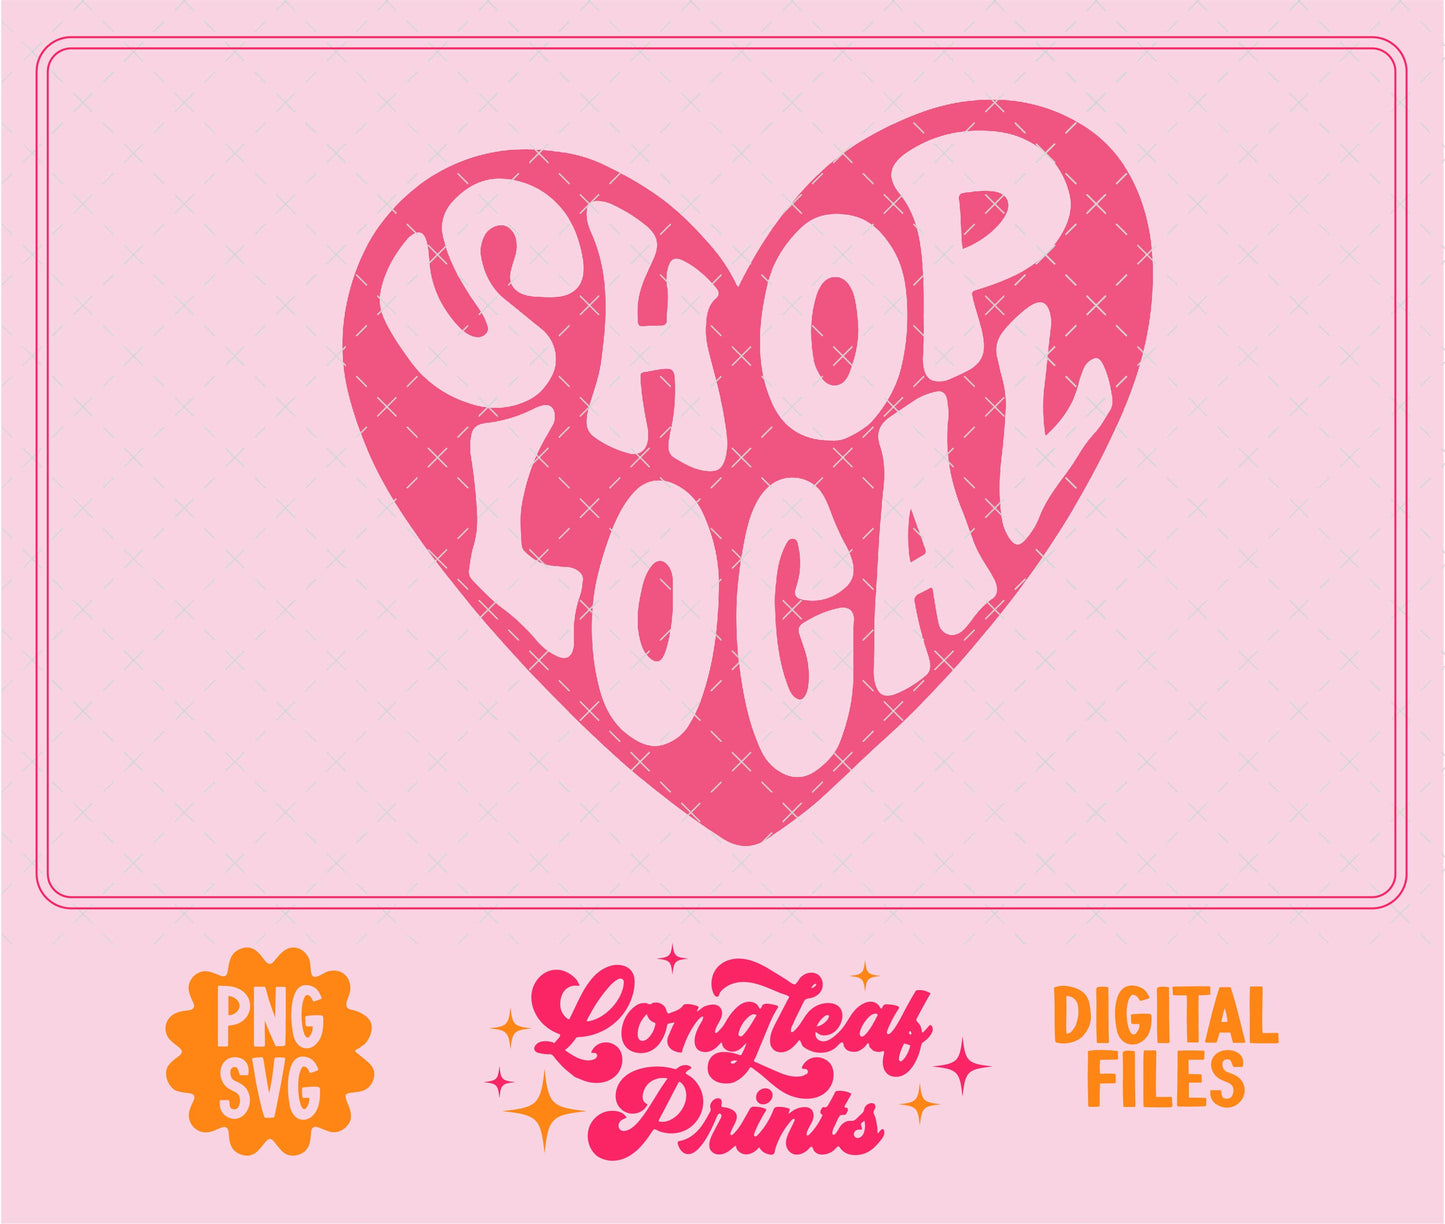 Shop Local Retro Heart SVG Digital Download Design File